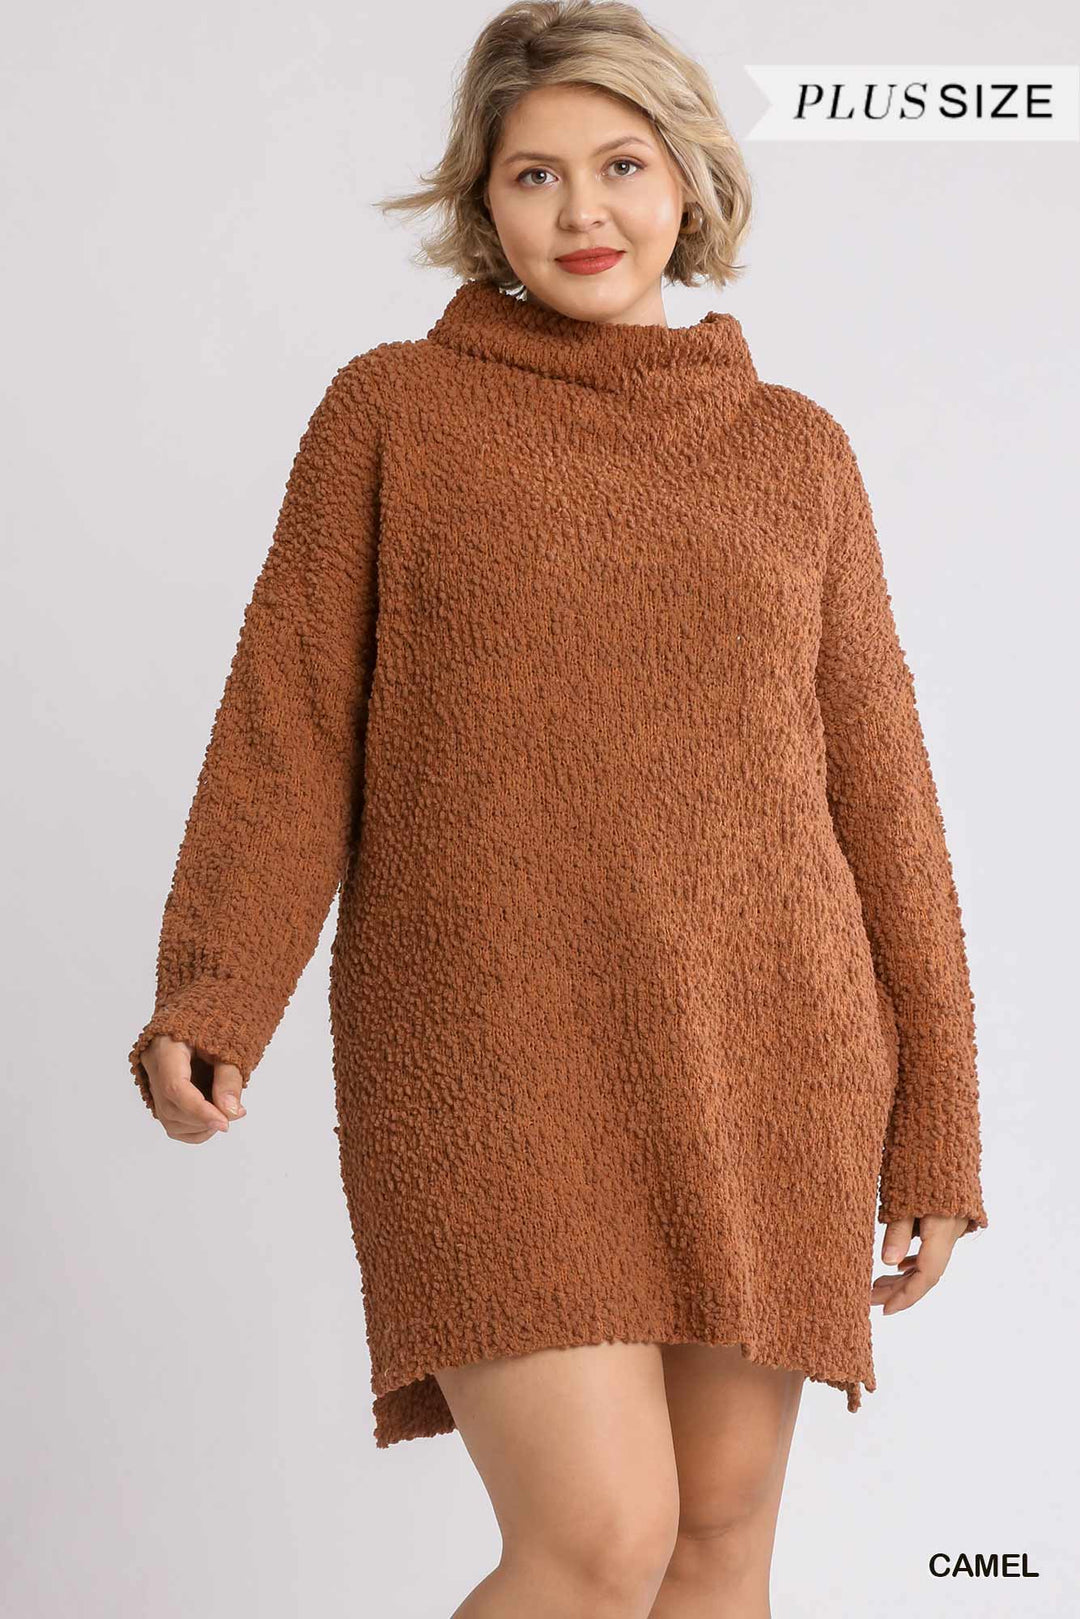 Umgee Melanie Cowl Neck Bouclé Sweater Dress - Camel  RYSE Clothing Co. XL  